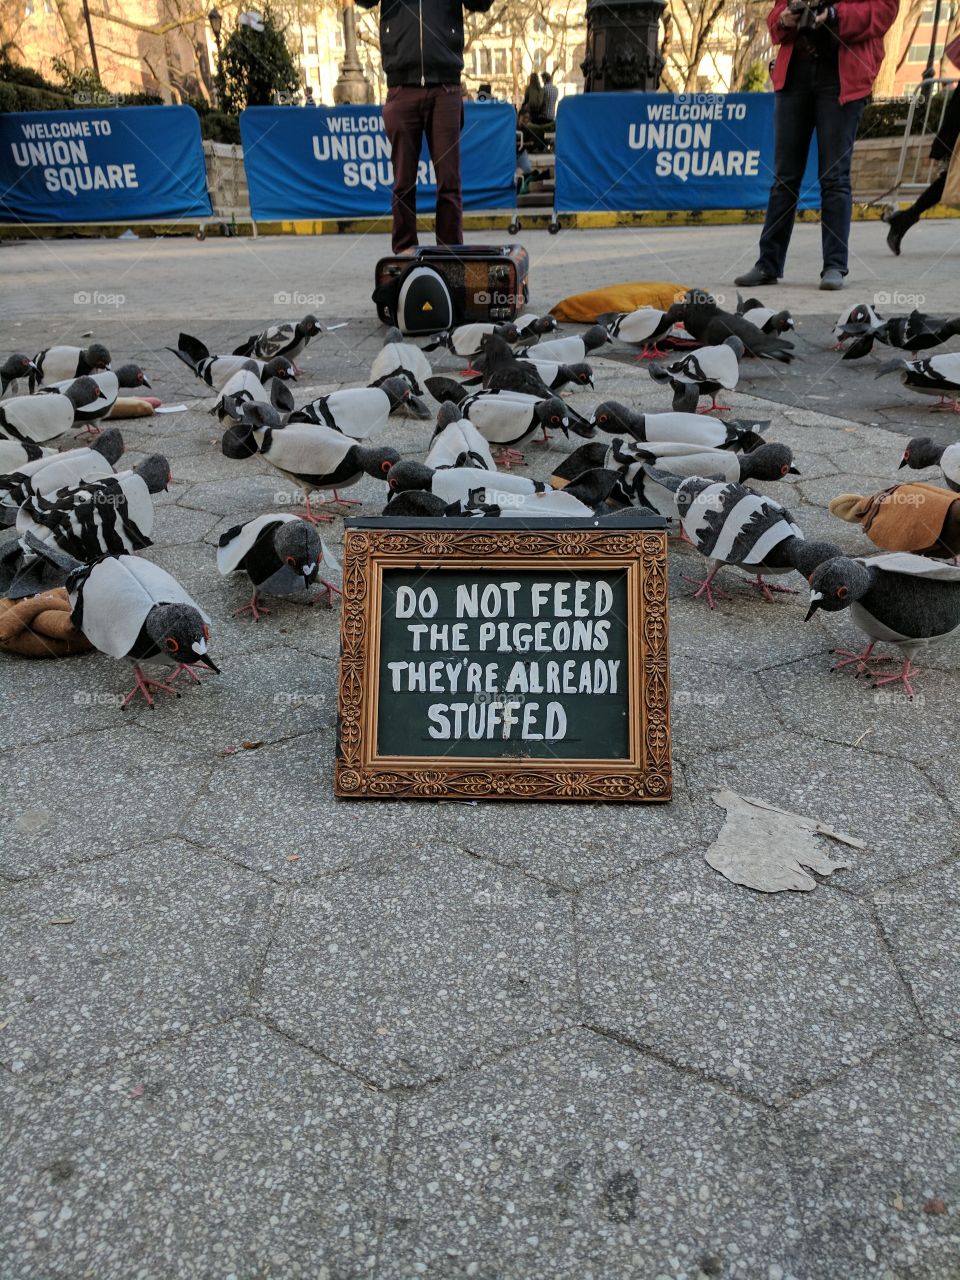 Stuffed Pigeons Street Art - Union Square - NYC